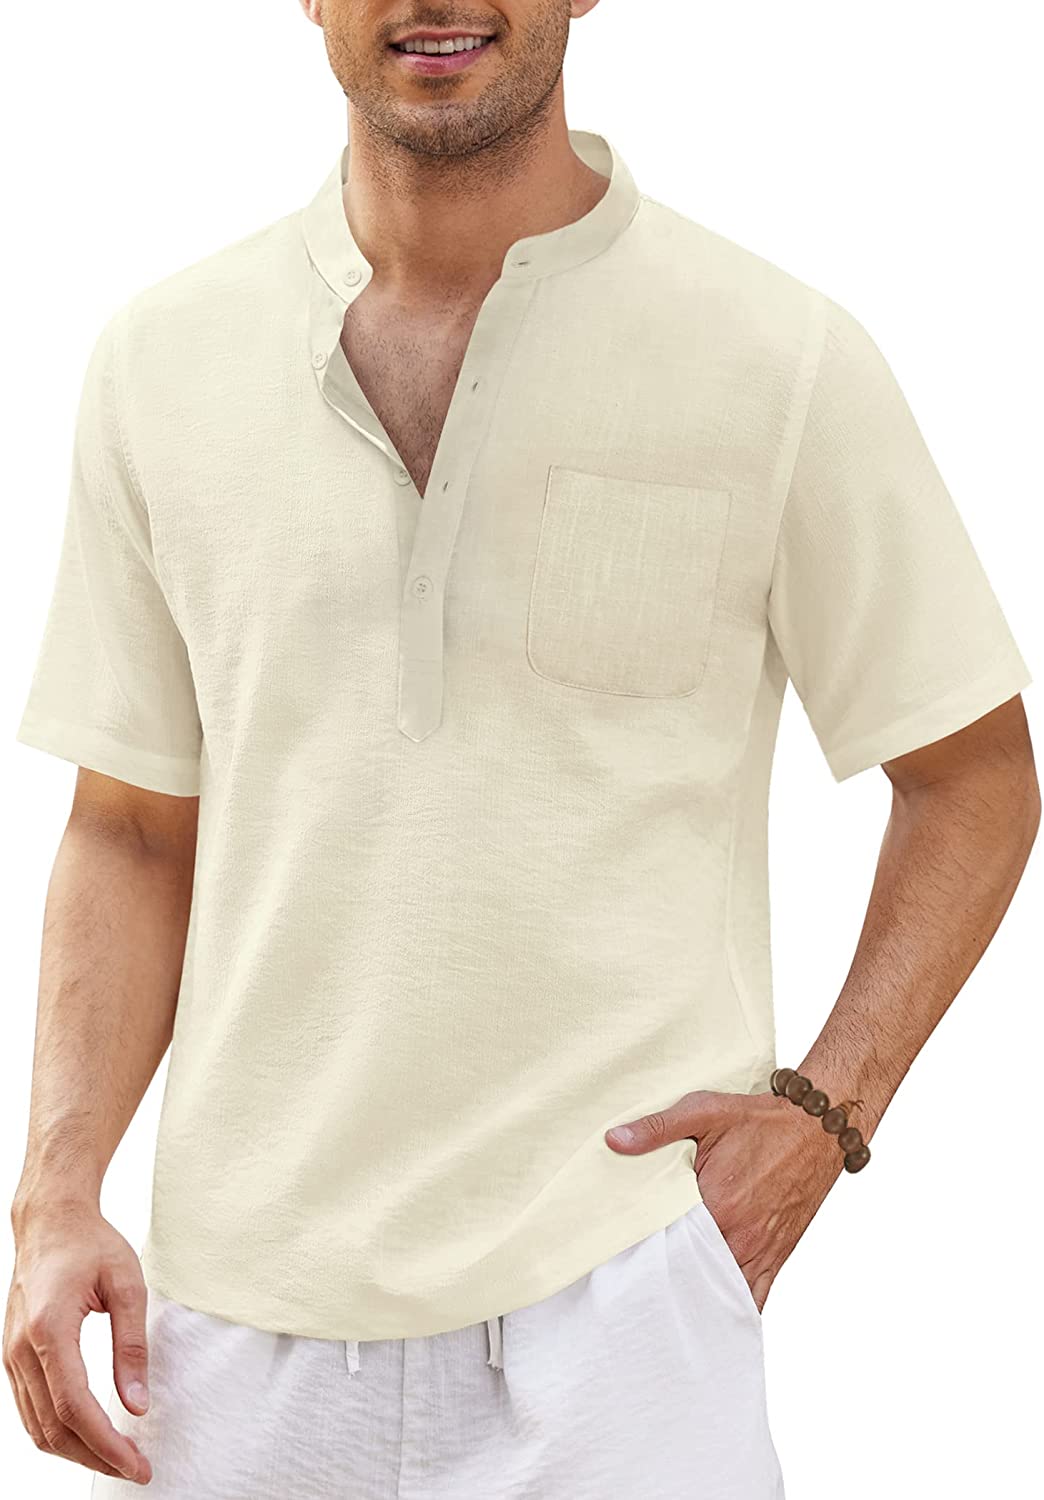 Men's Natural Collarless Cotton Short Sleeve Shirt 